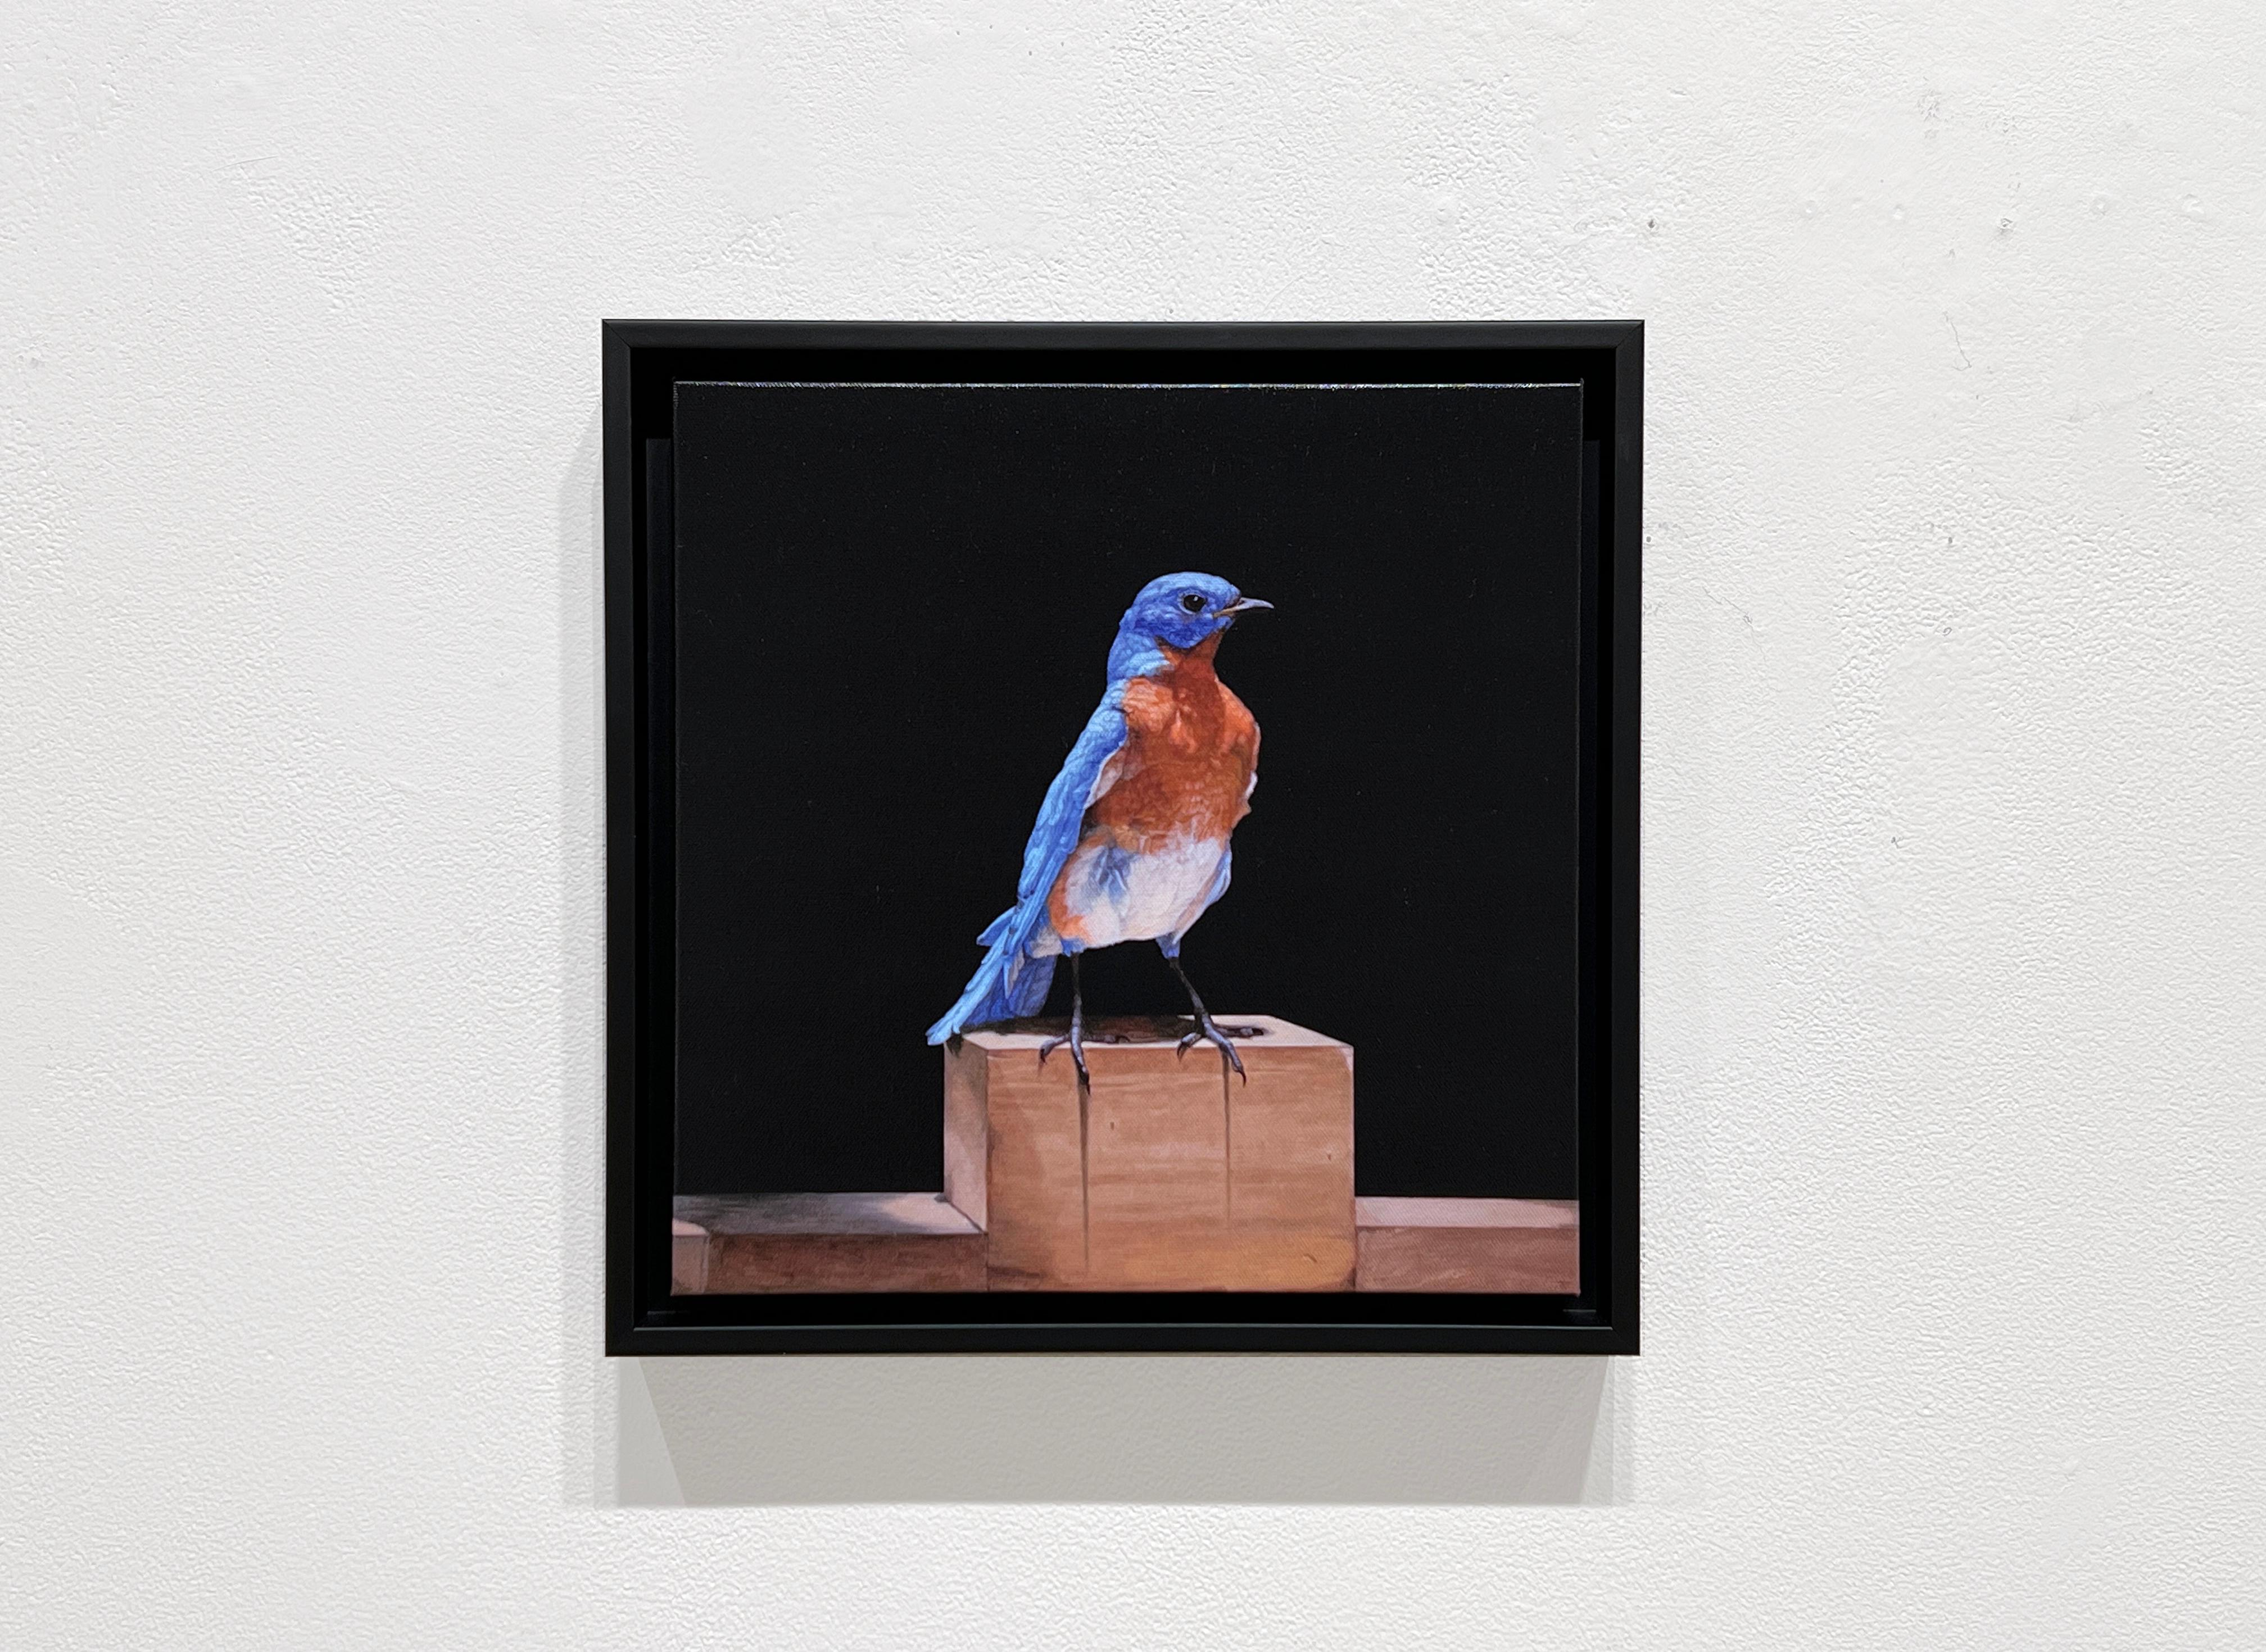 EASTERN BLUE BIRD - Contemporary / photorealism / animal print - Print by Patricia Traub